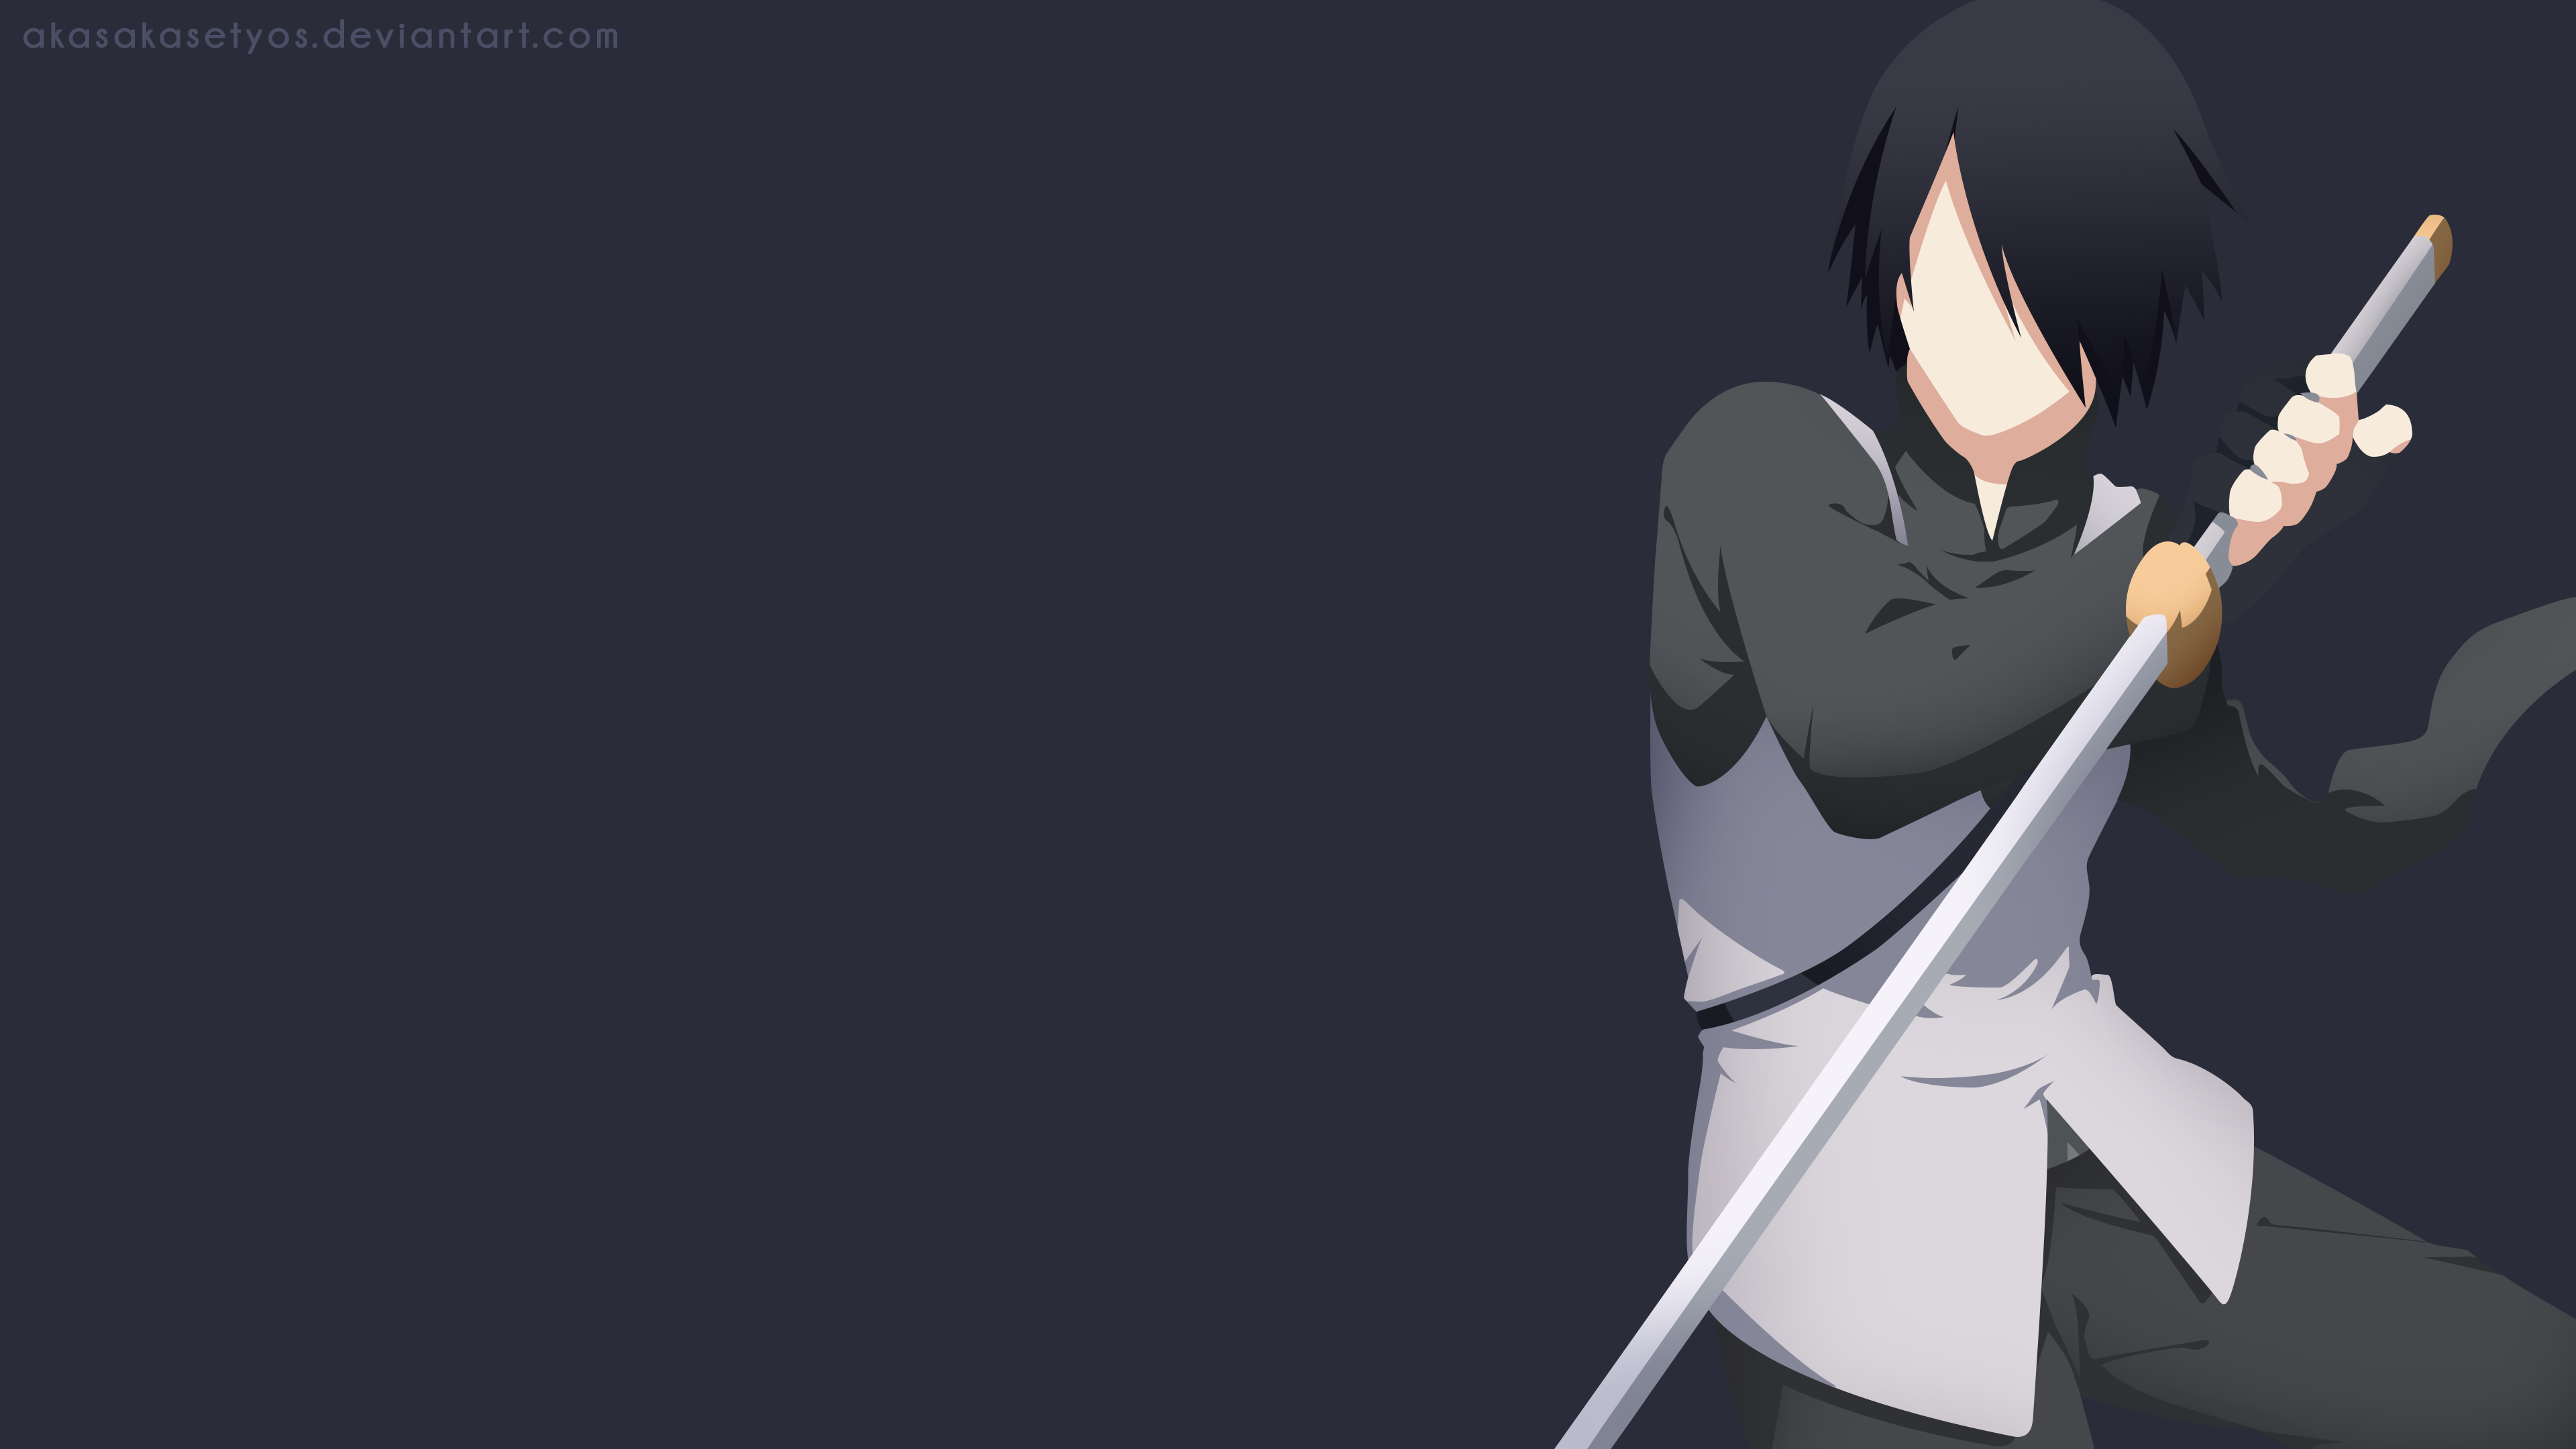 Sasuke Uchiha 4k Ultra HD Wallpaper | Background Image ...